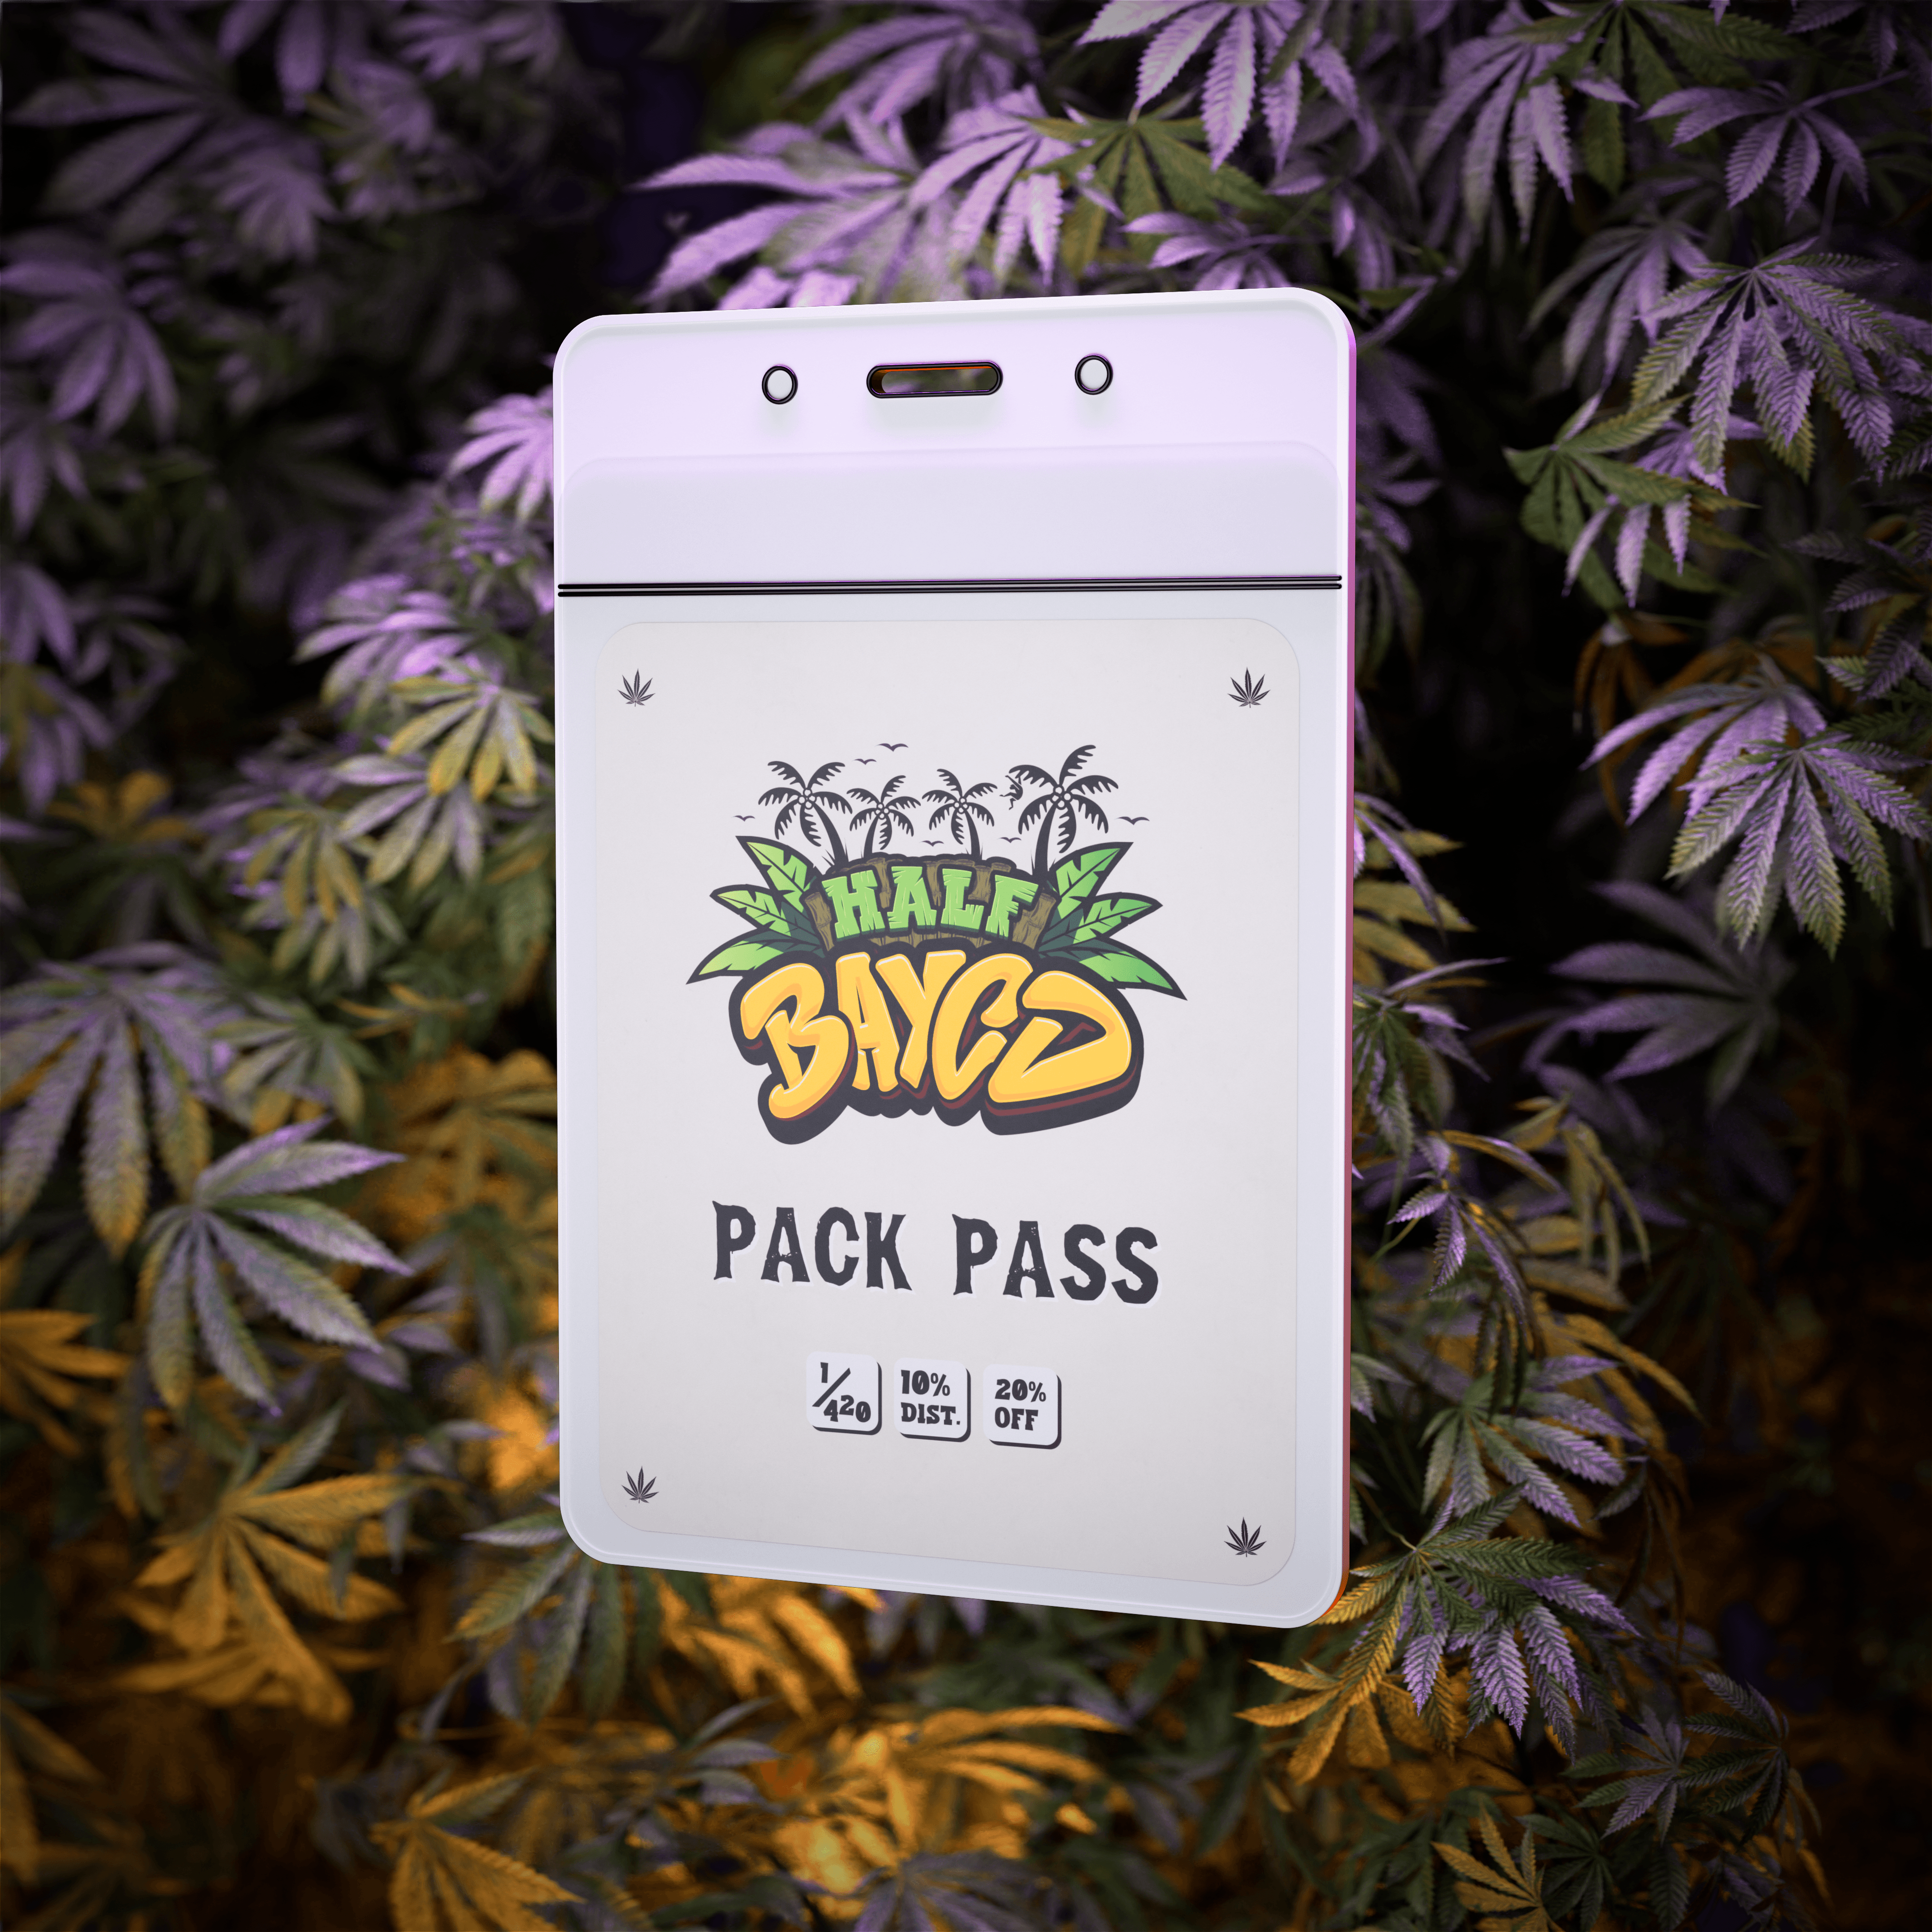 Half BAYCD: Pack Pass